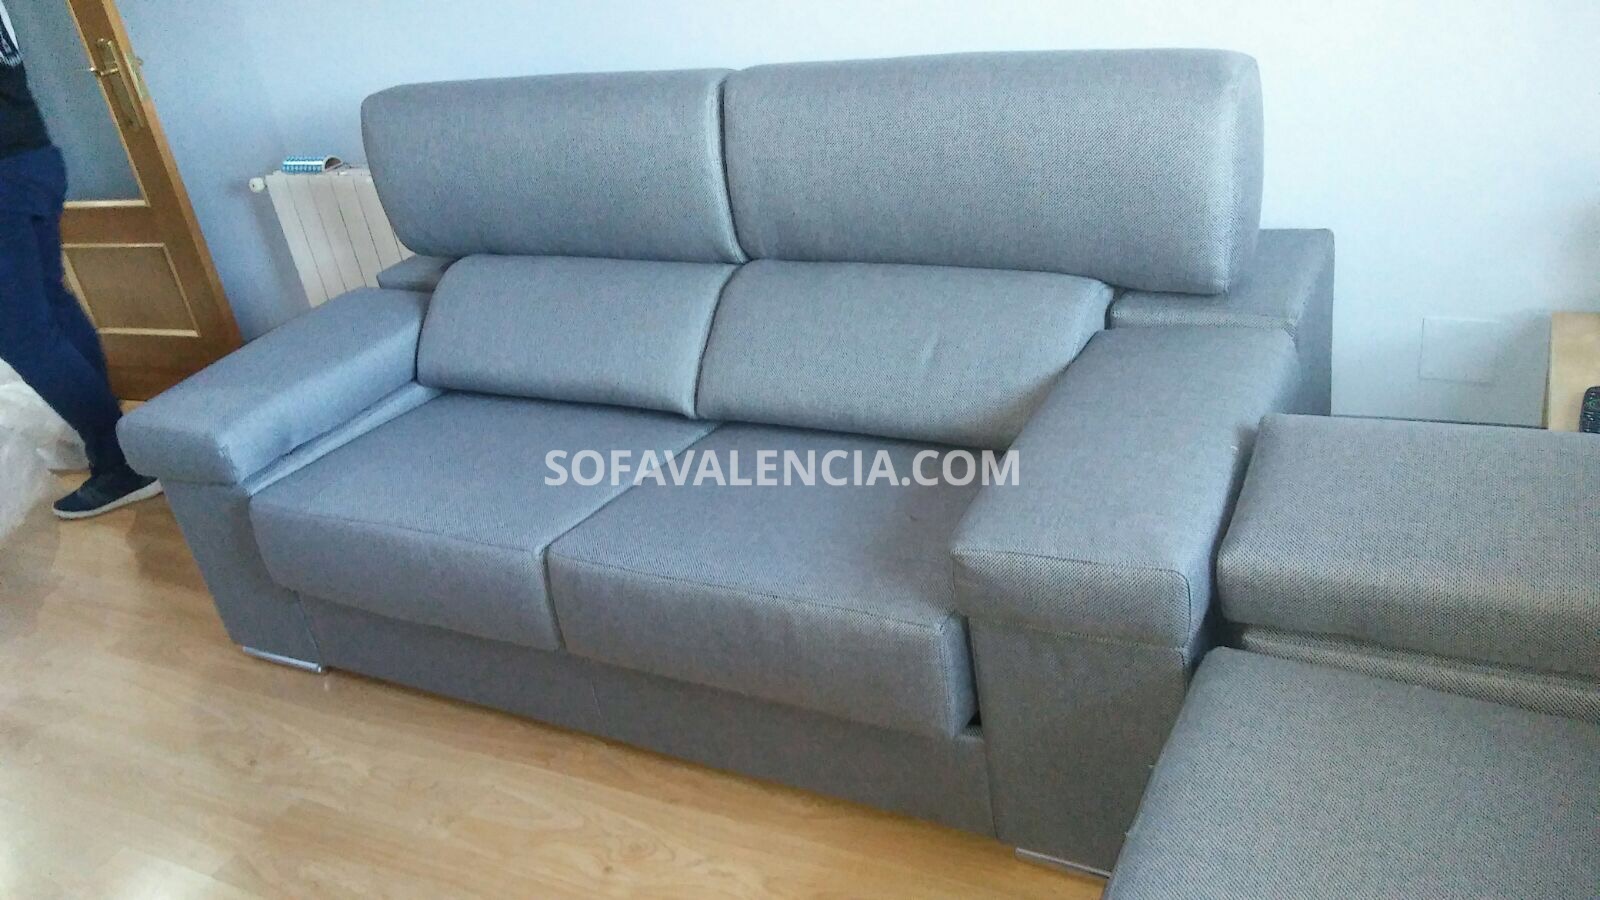 sofa-valencia-fotos-clientes-91